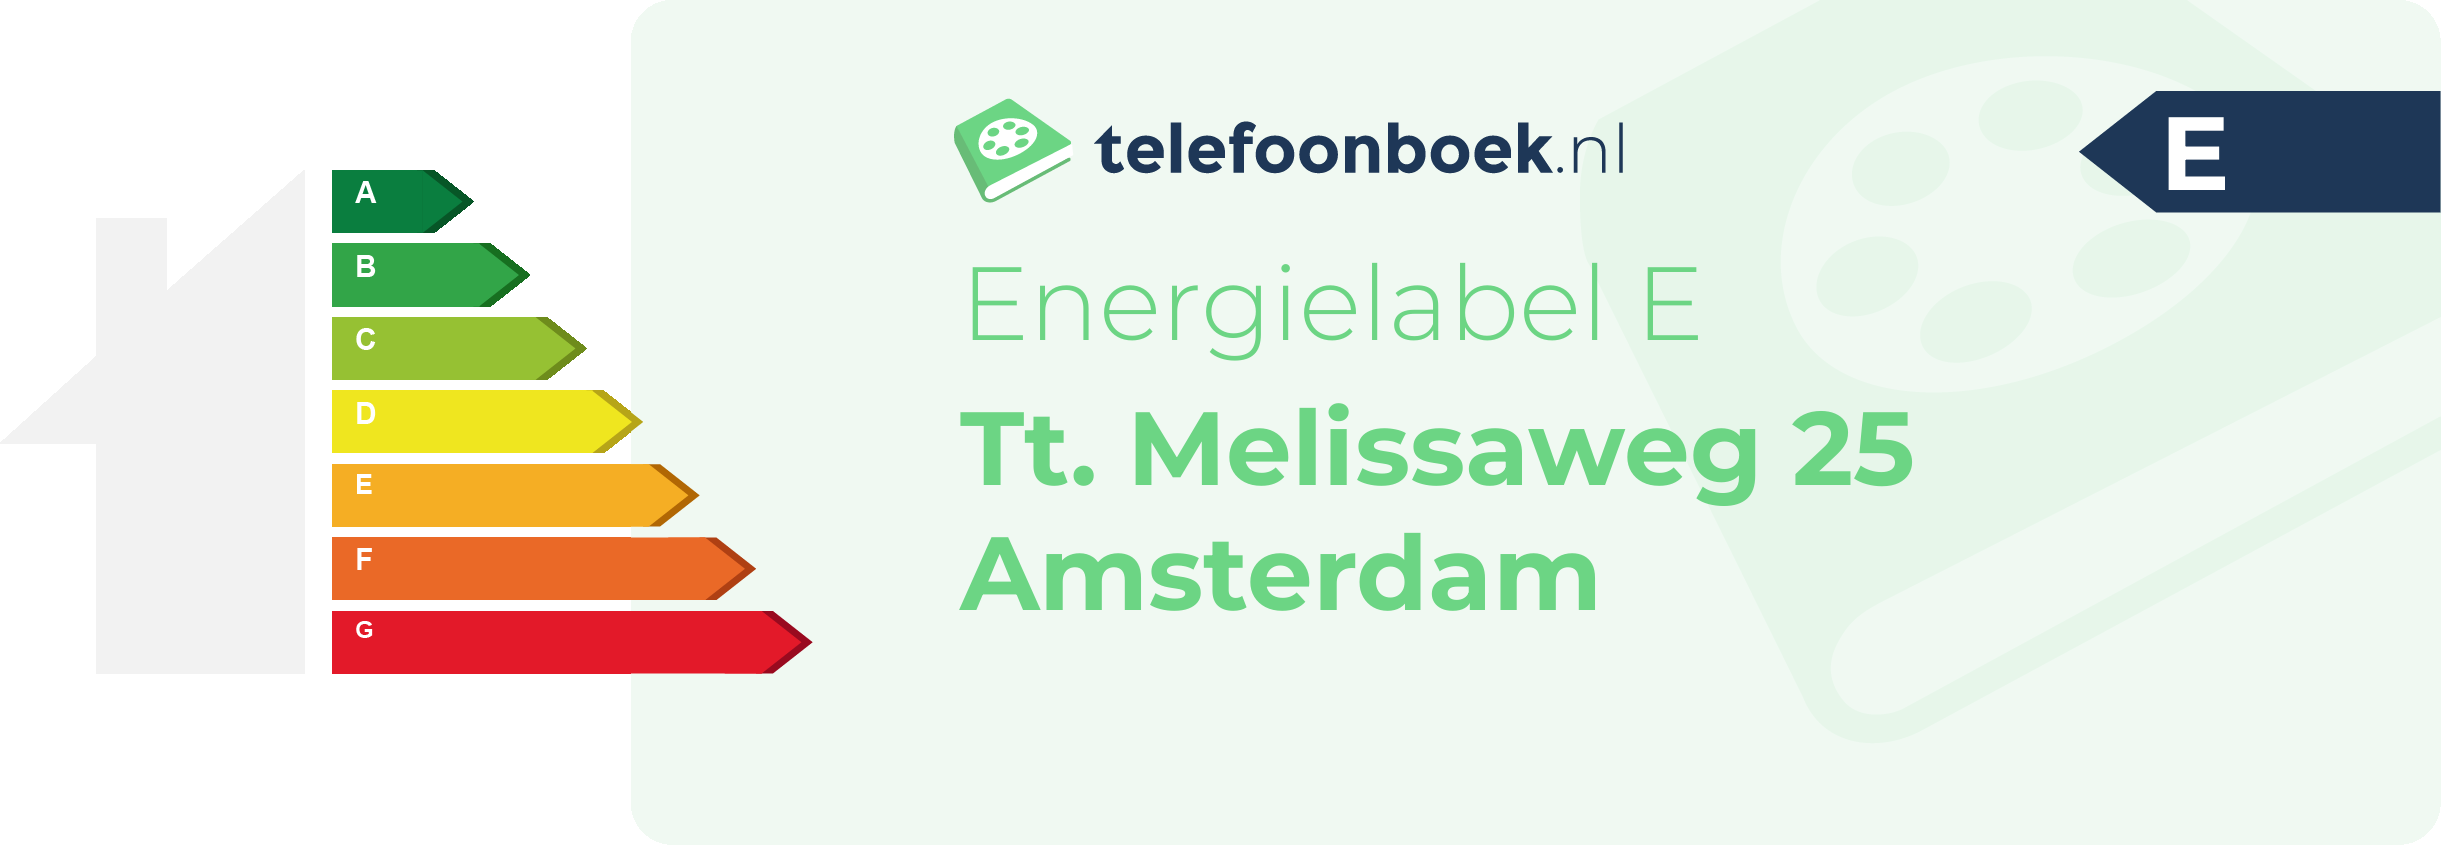 Energielabel Tt. Melissaweg 25 Amsterdam